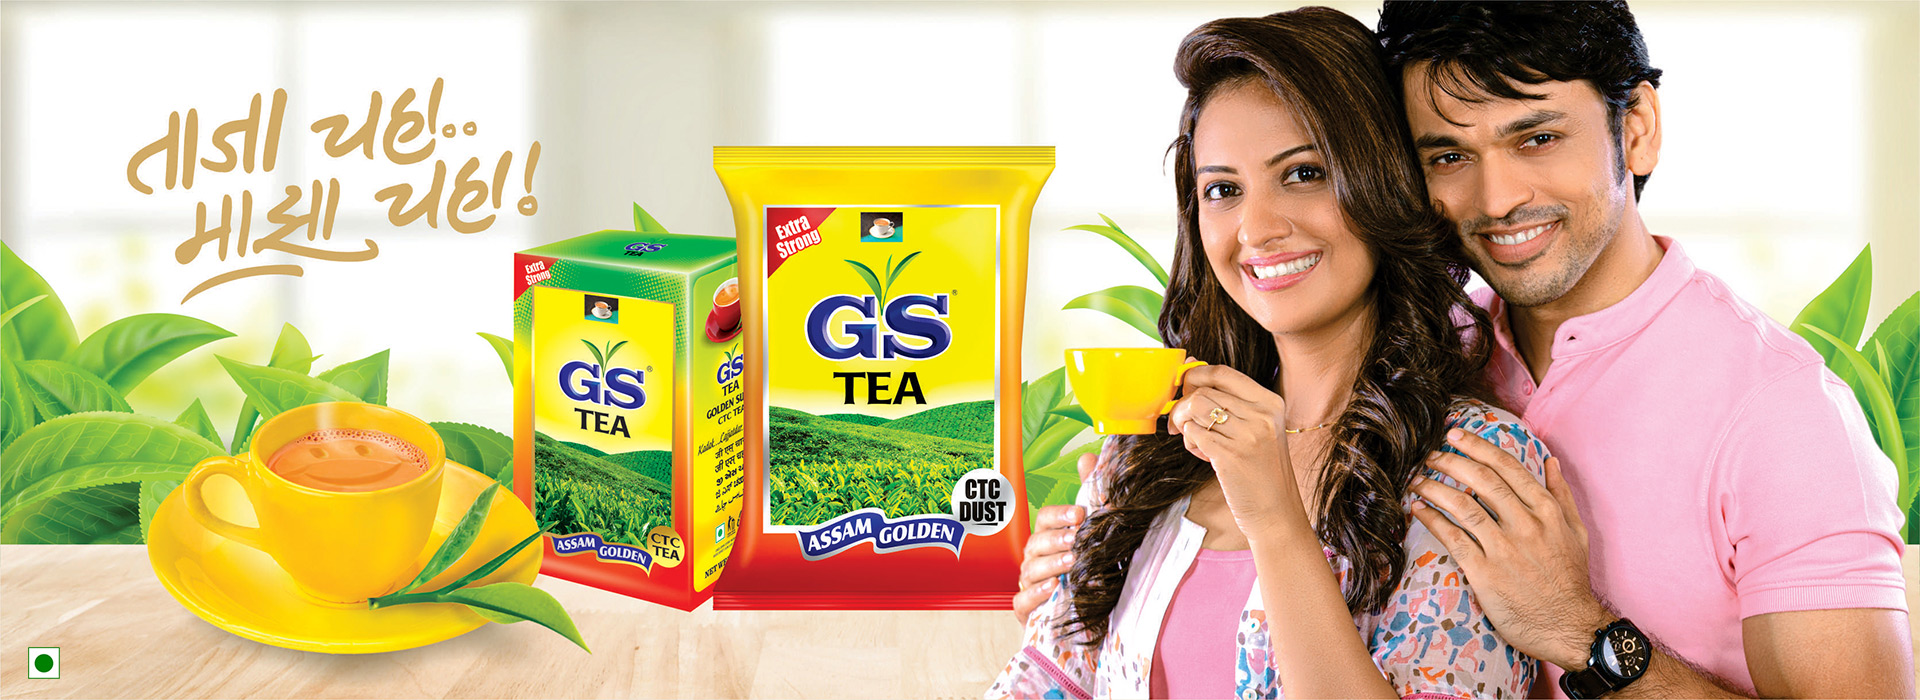 Tea Manufacturing Company in India 